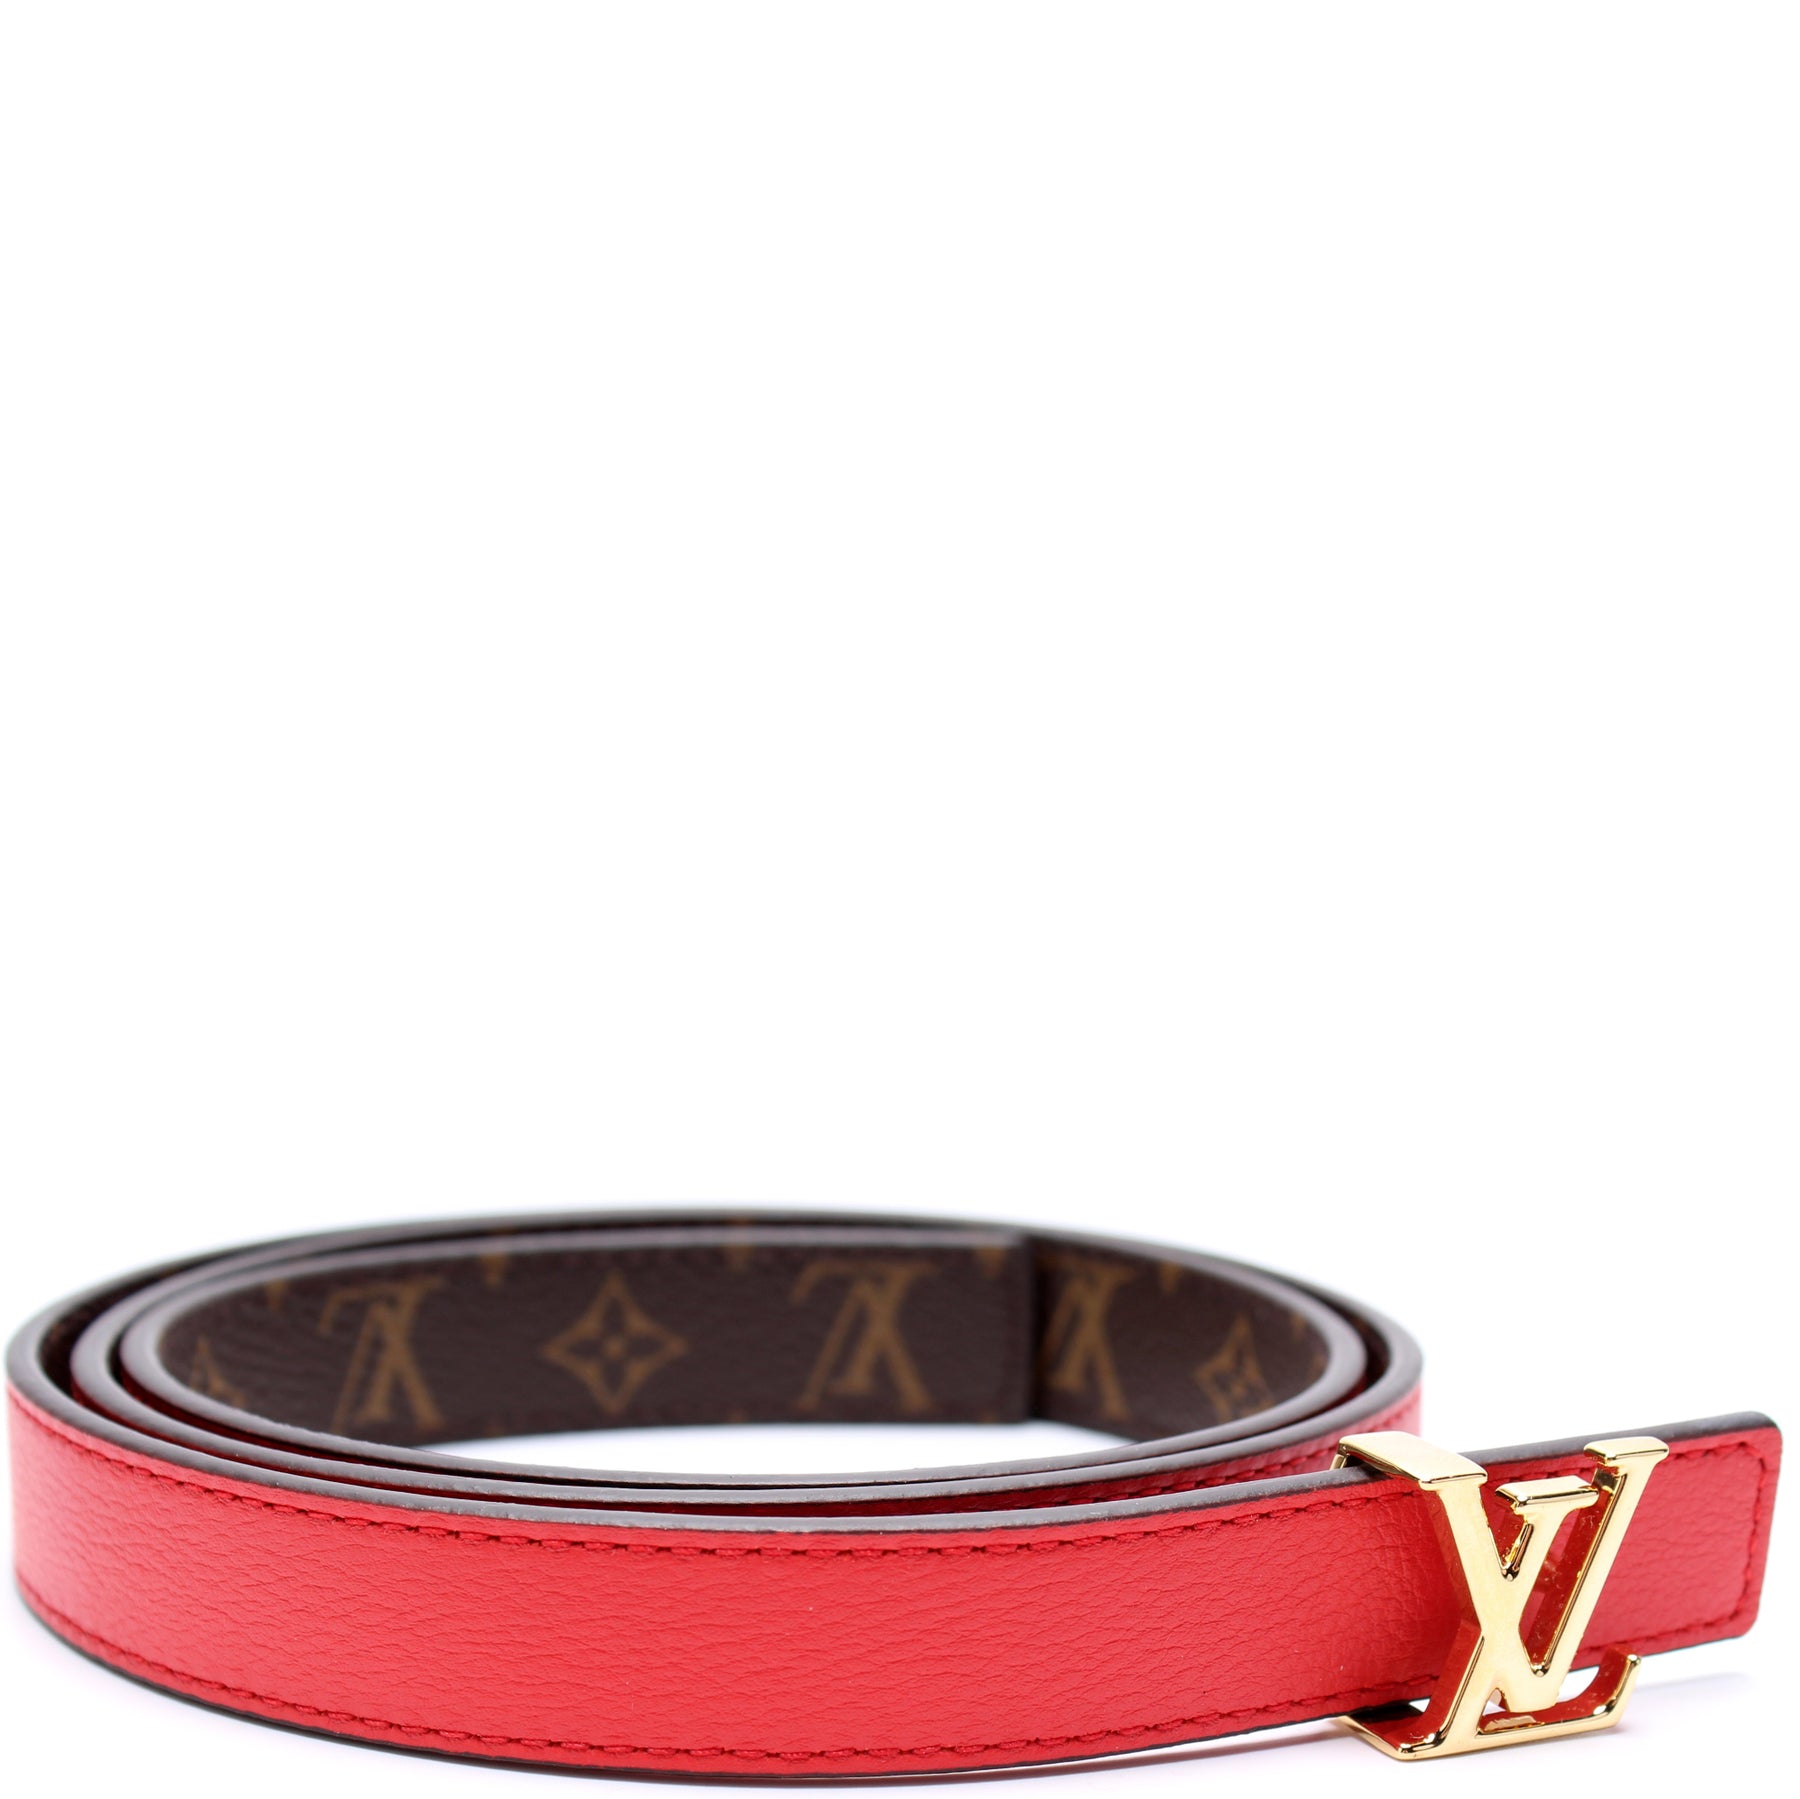 Red Monogram Leather Belt